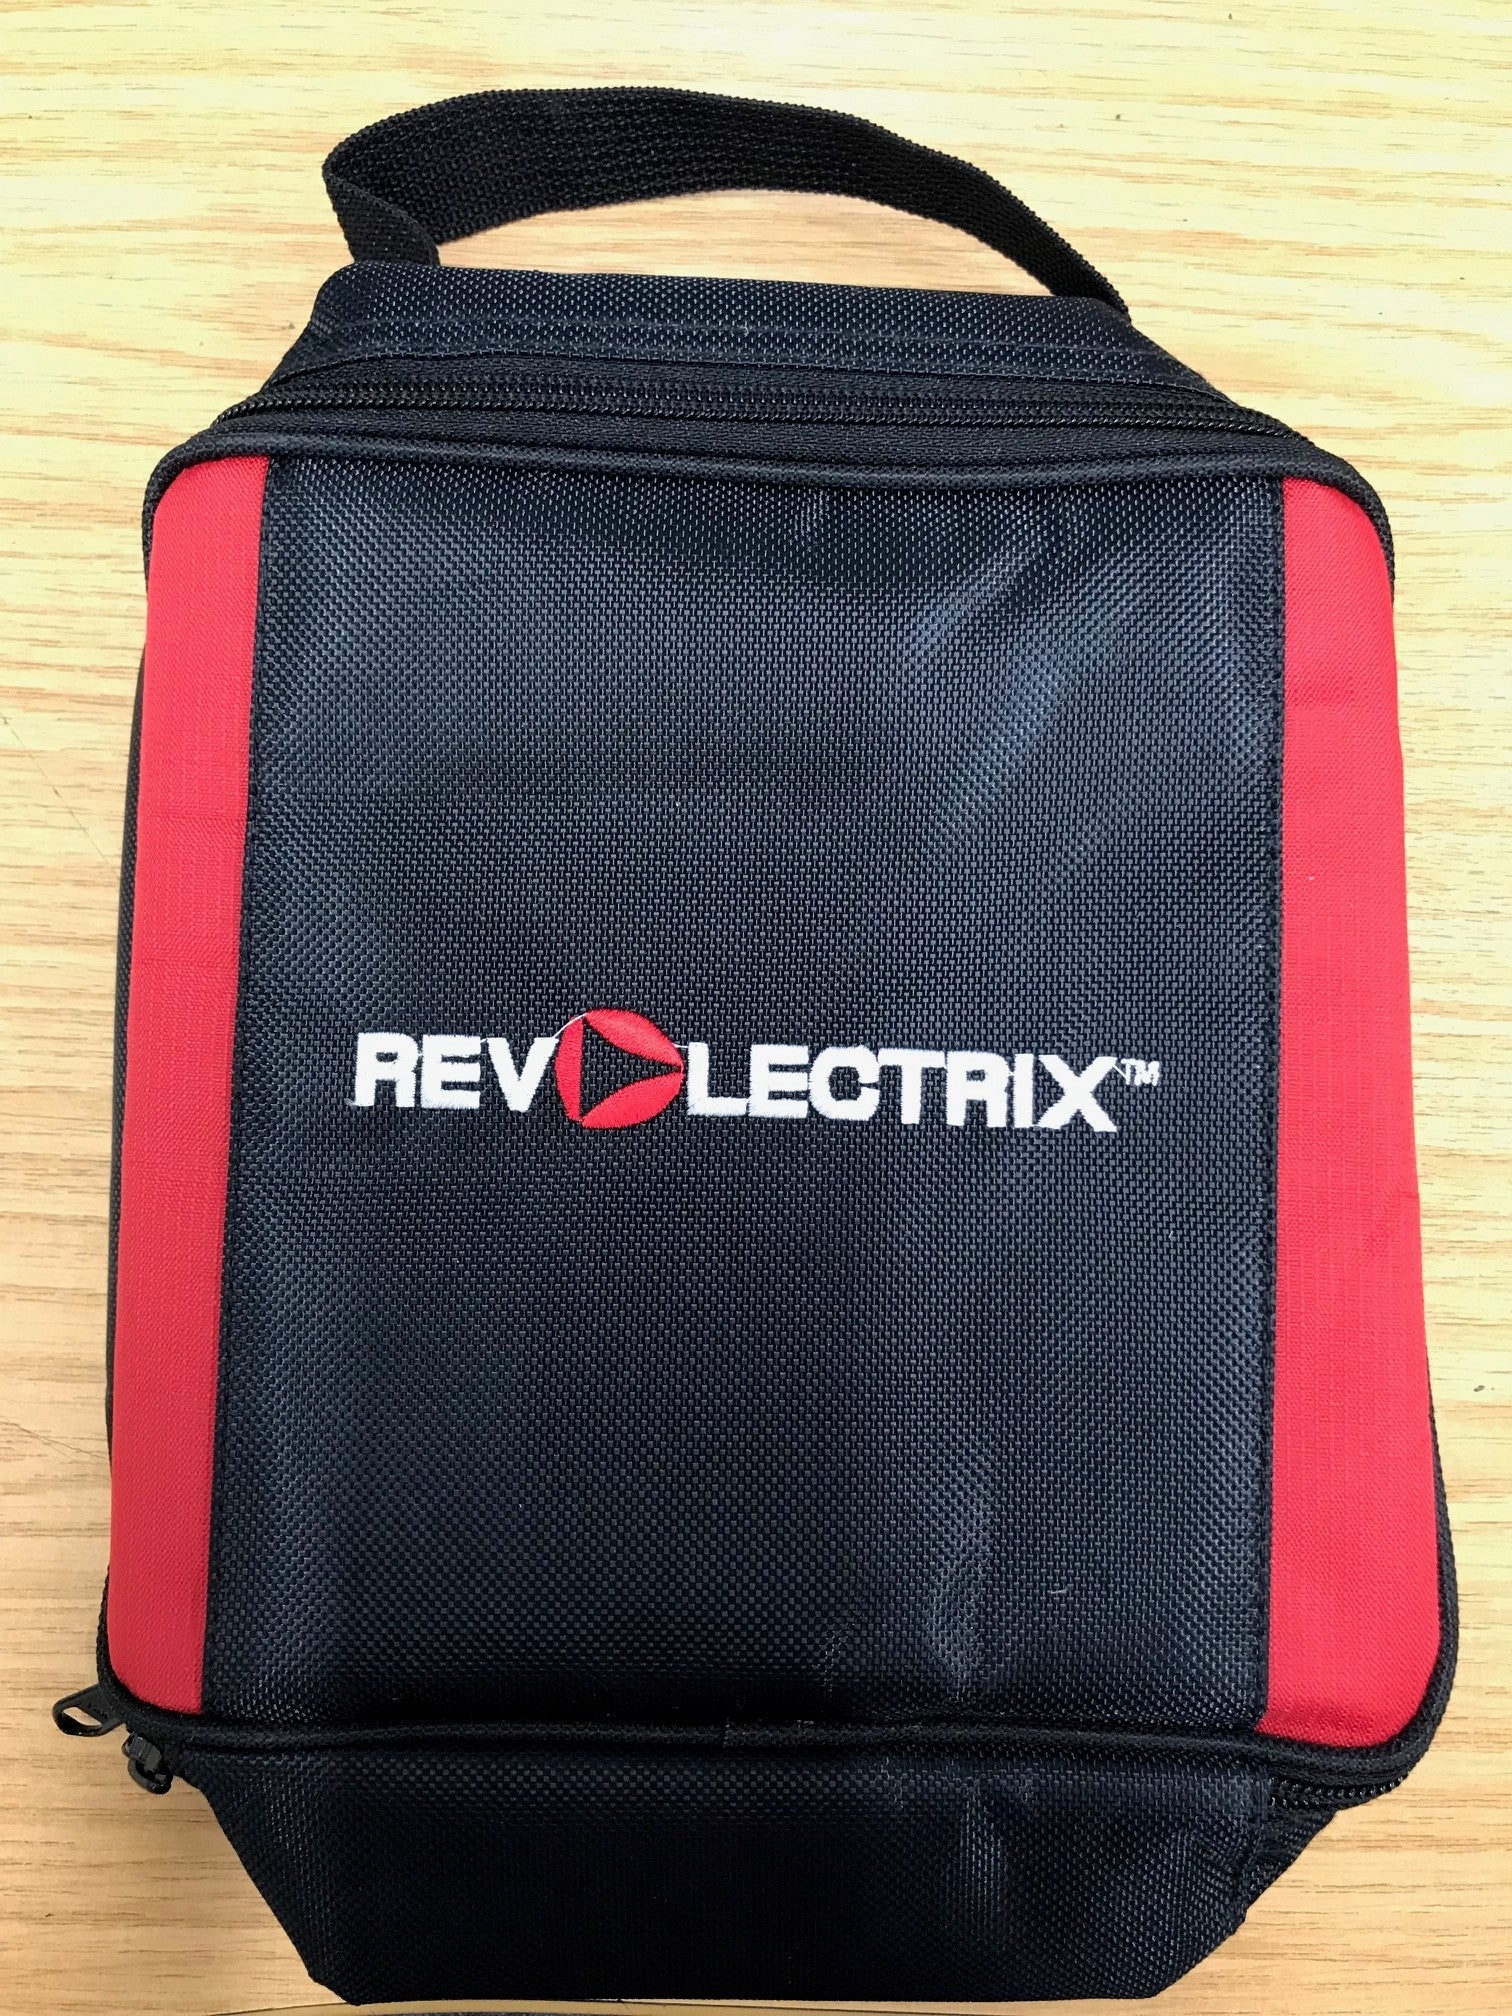 Optipower Revolectrix Charger Carry Bag Case OPRREVOBAG